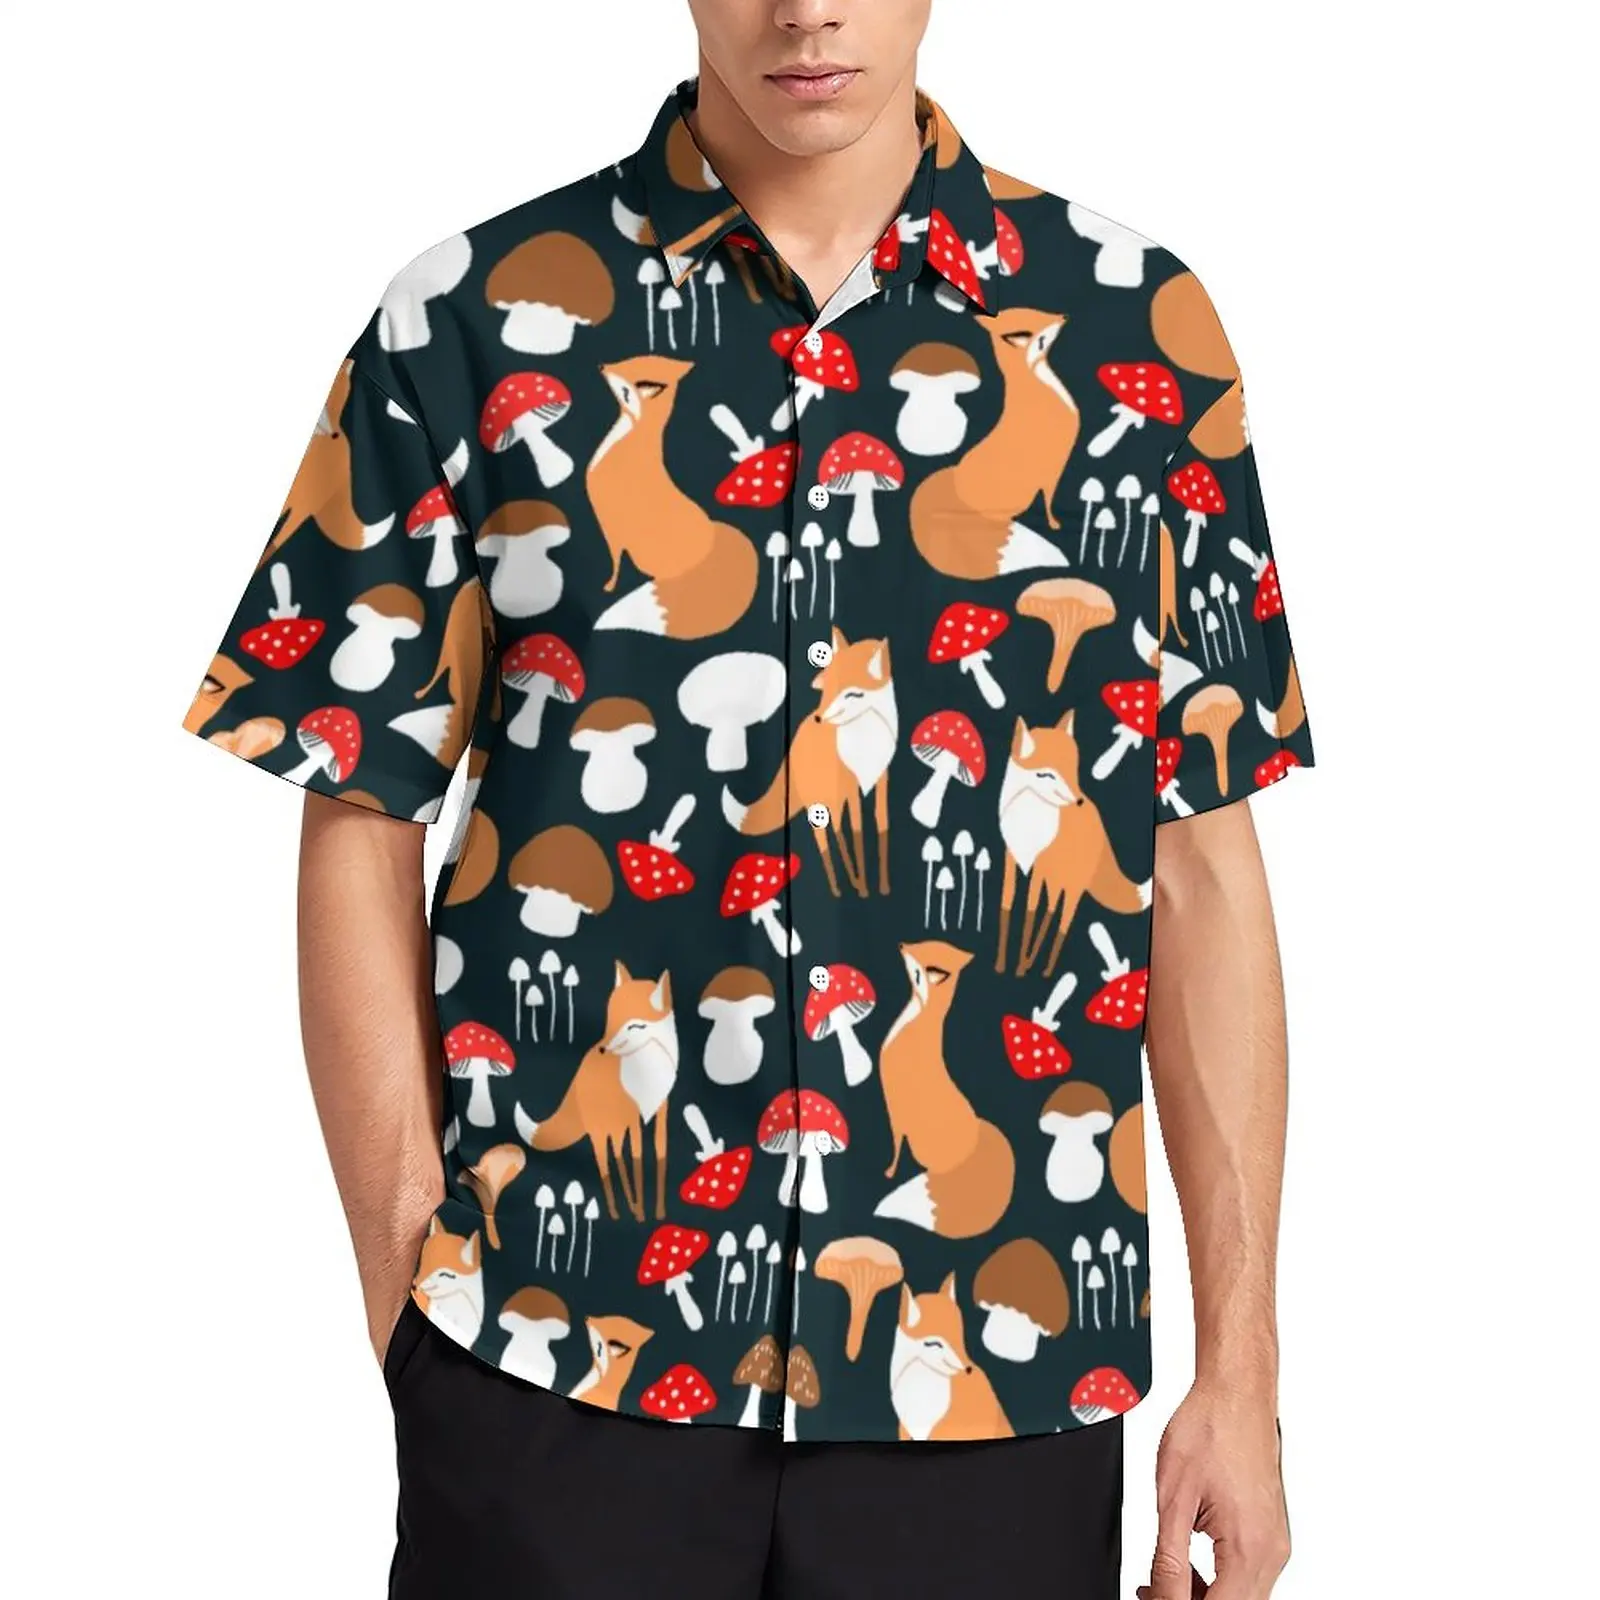 

Mushroom Design Blouses Man Cute Fox Print Casual Shirts Hawaii Short Sleeves Printed Vintage Oversized Vacation Shirt Gift Idea